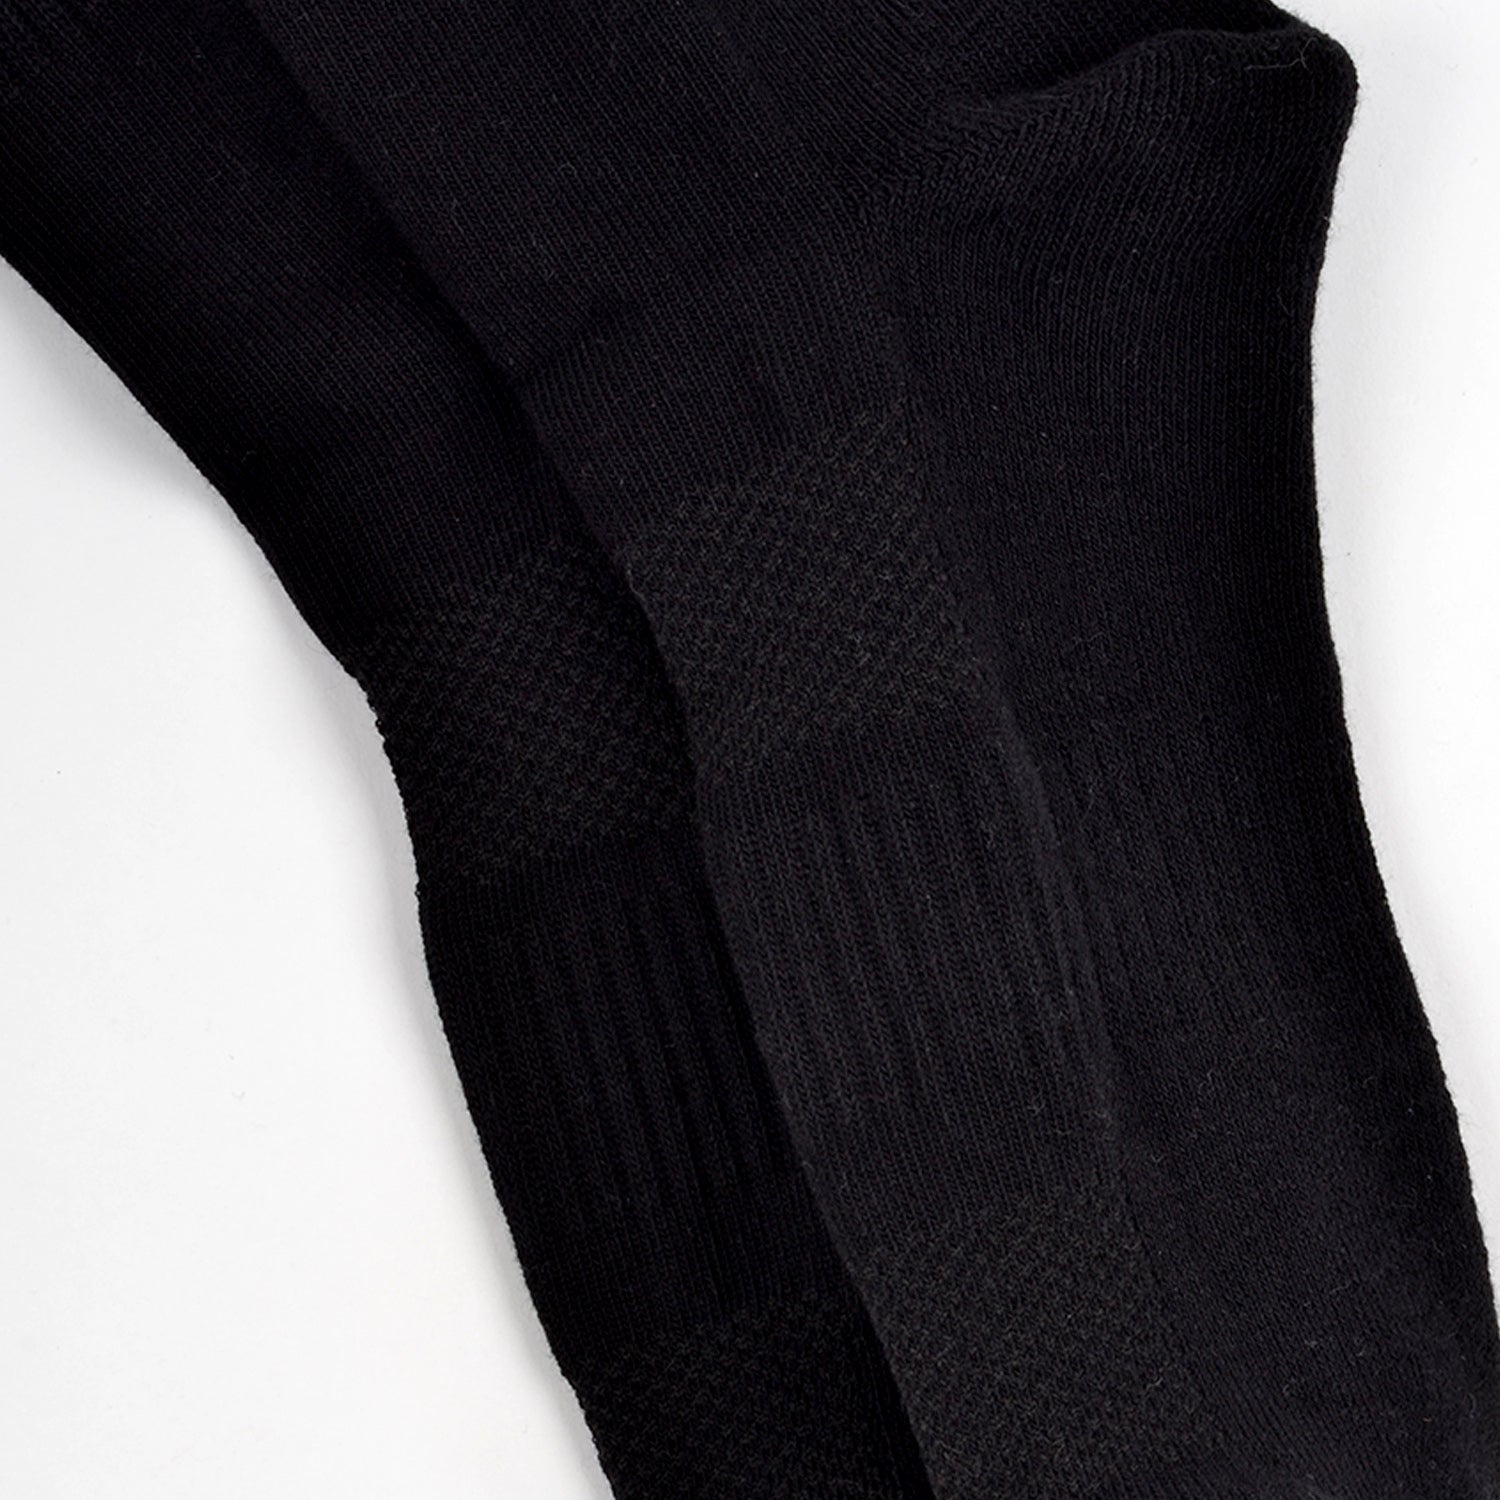 FOOTPRINTS Solid Ankle-Length Socks -Pack Of 3